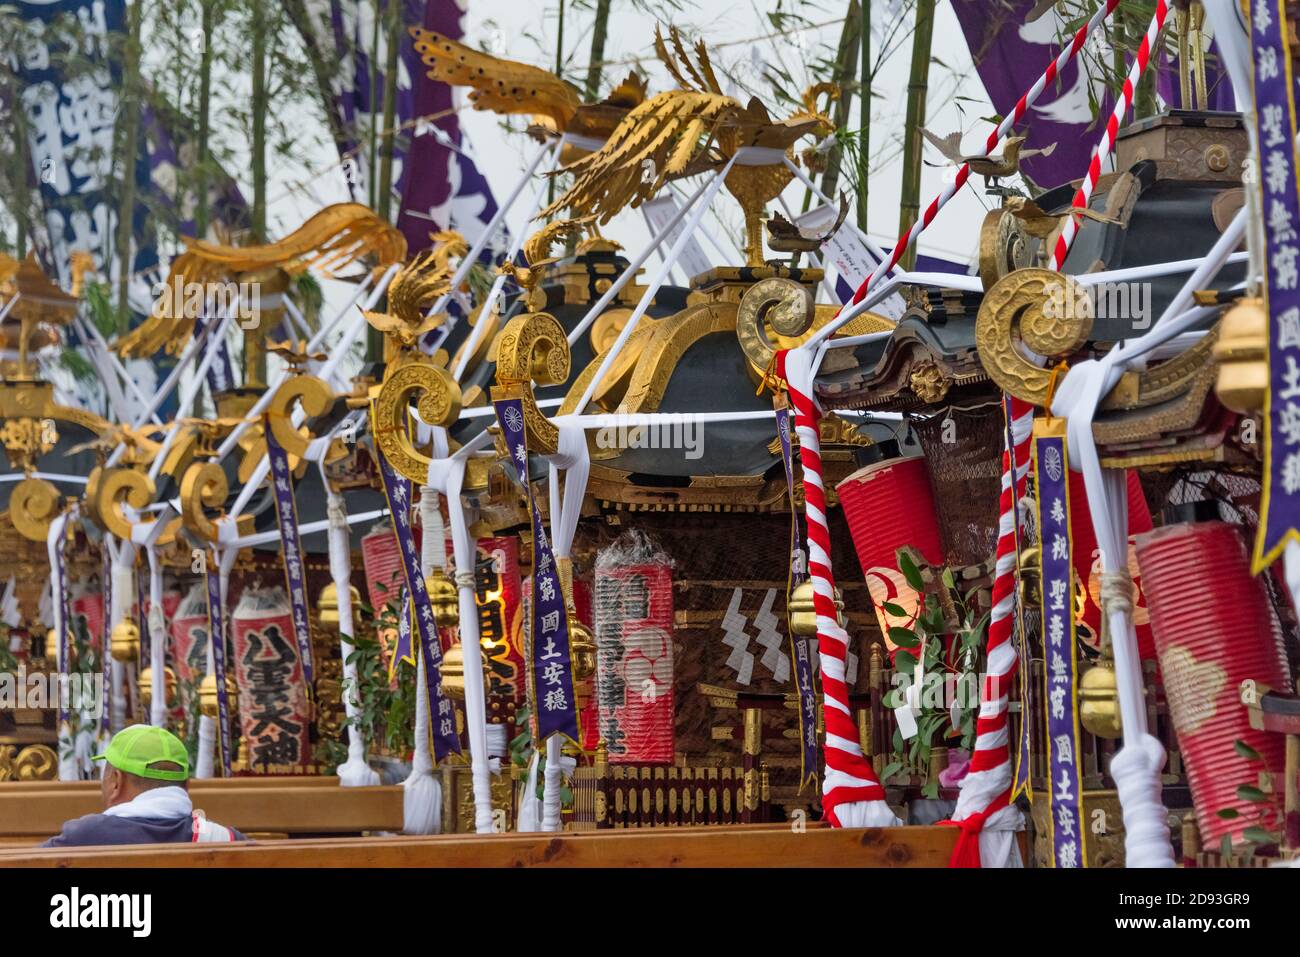 Parade carrying portable shinto shrines celebrating Hamaori Festival, Chigasaki, Kanagawa Prefecture, Japan Stock Photo